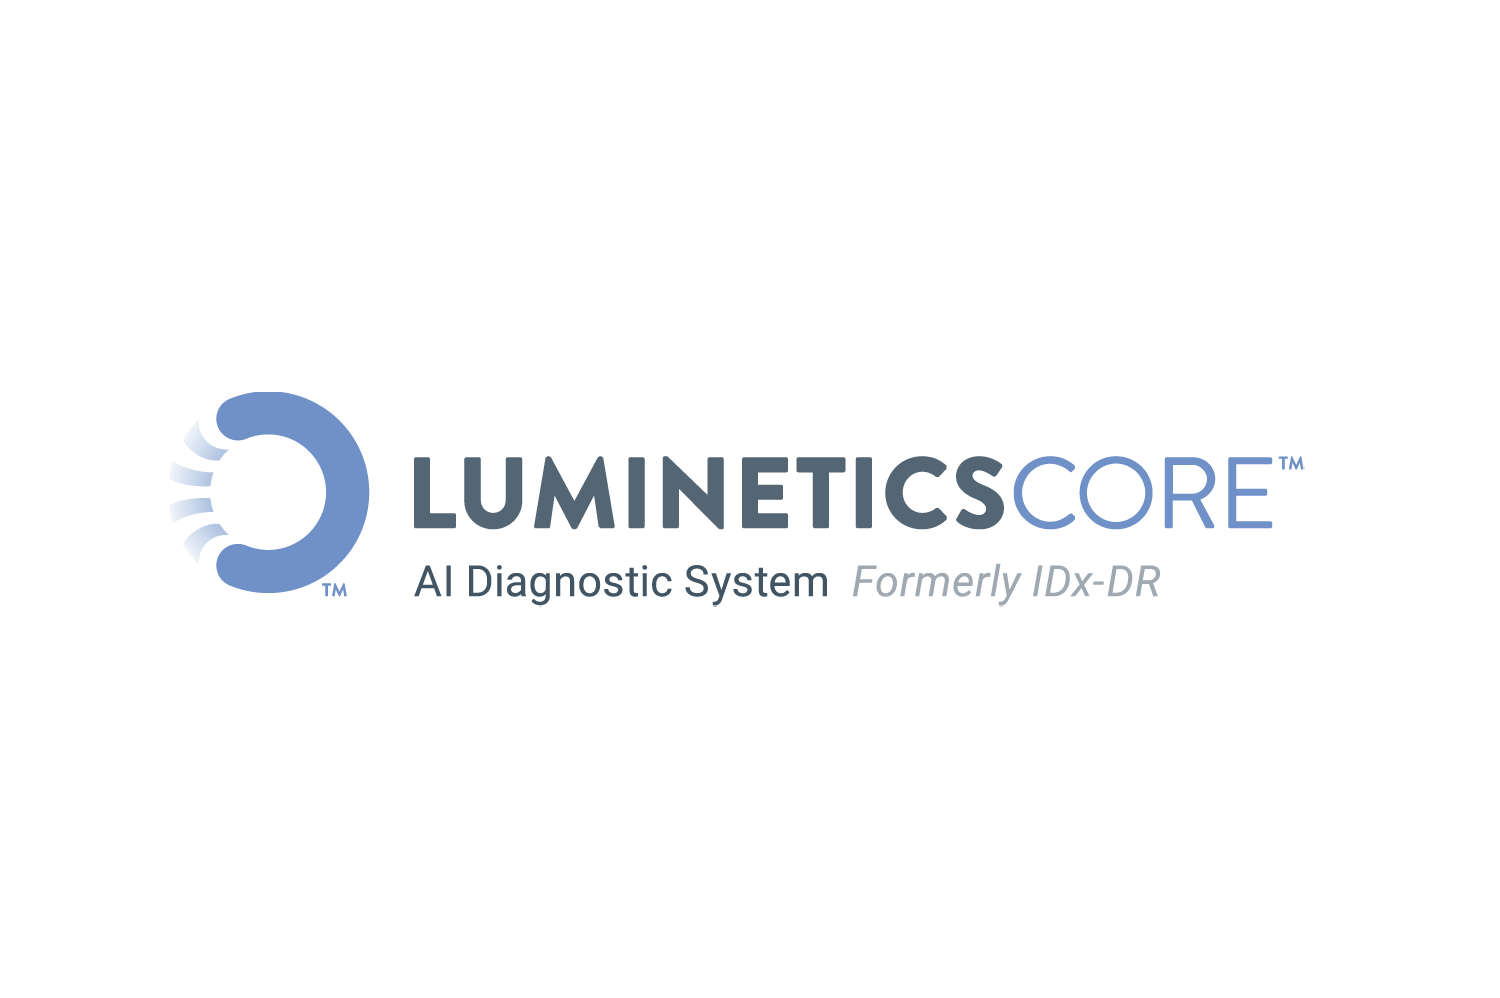 Digital Diagnostics Sheds Light on AI Tech with LumineticsCore™ Product Rebrand